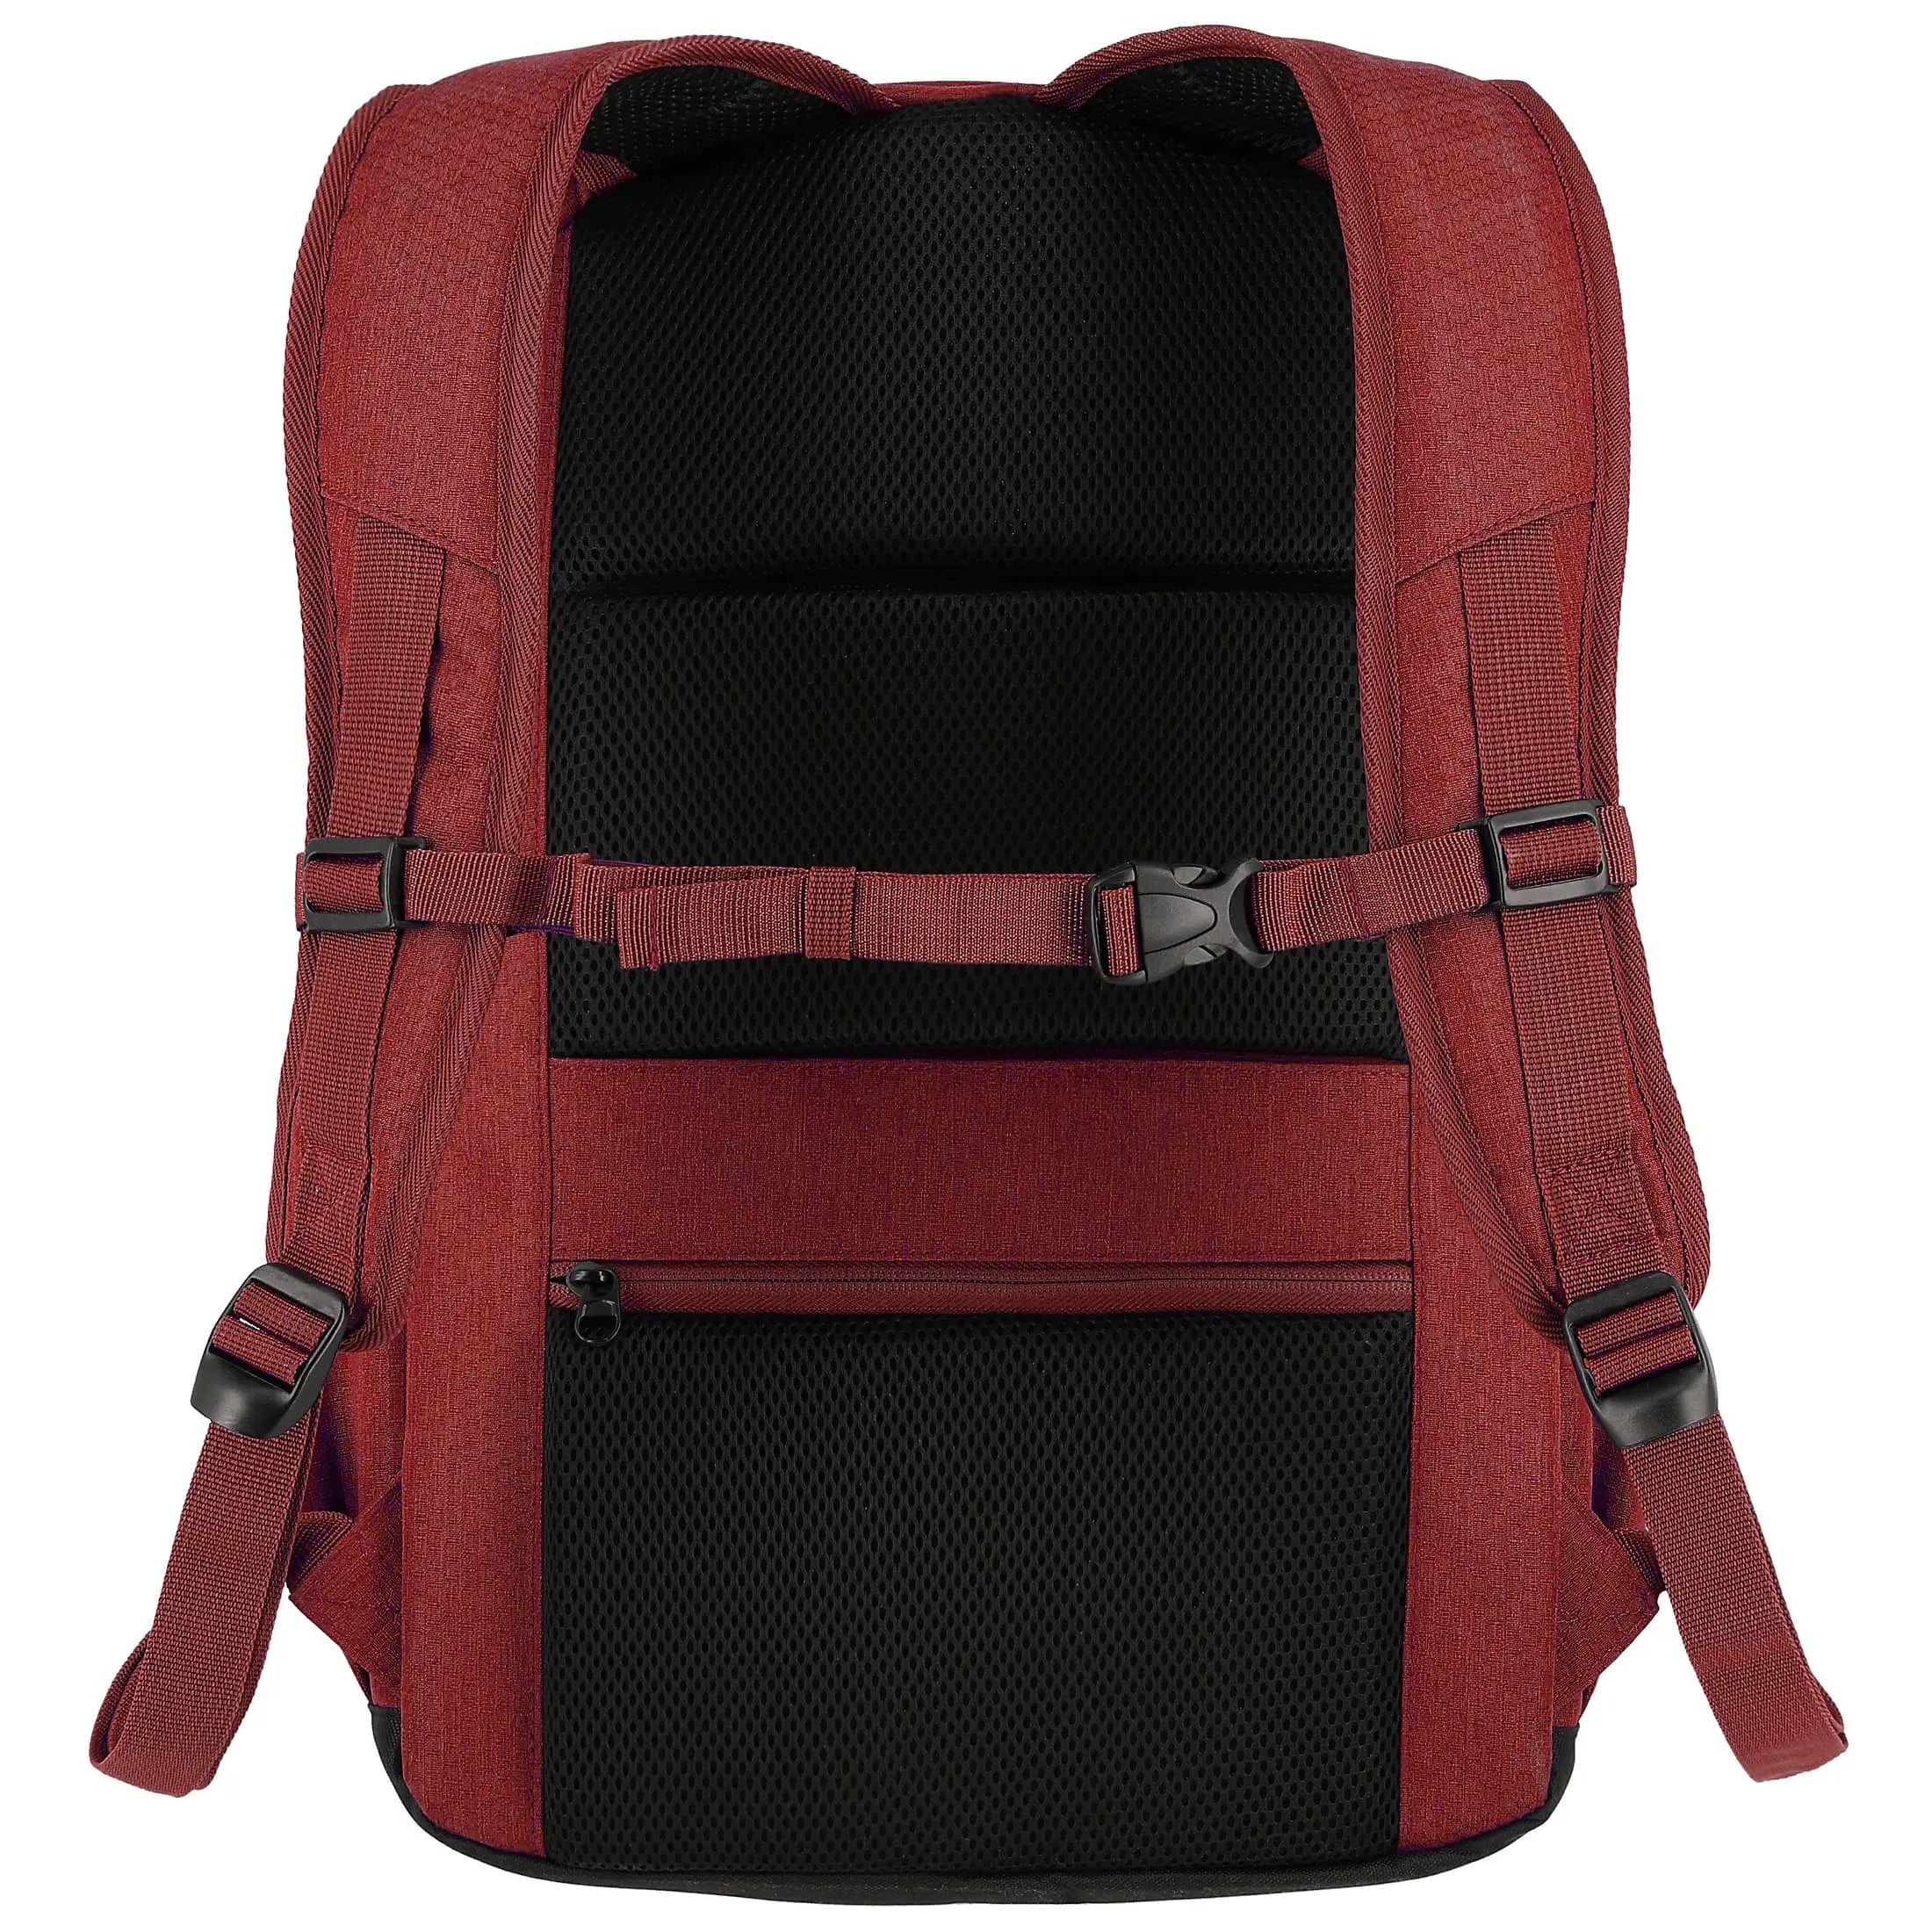 Travelite Kick Off Backpack 45 cm - red